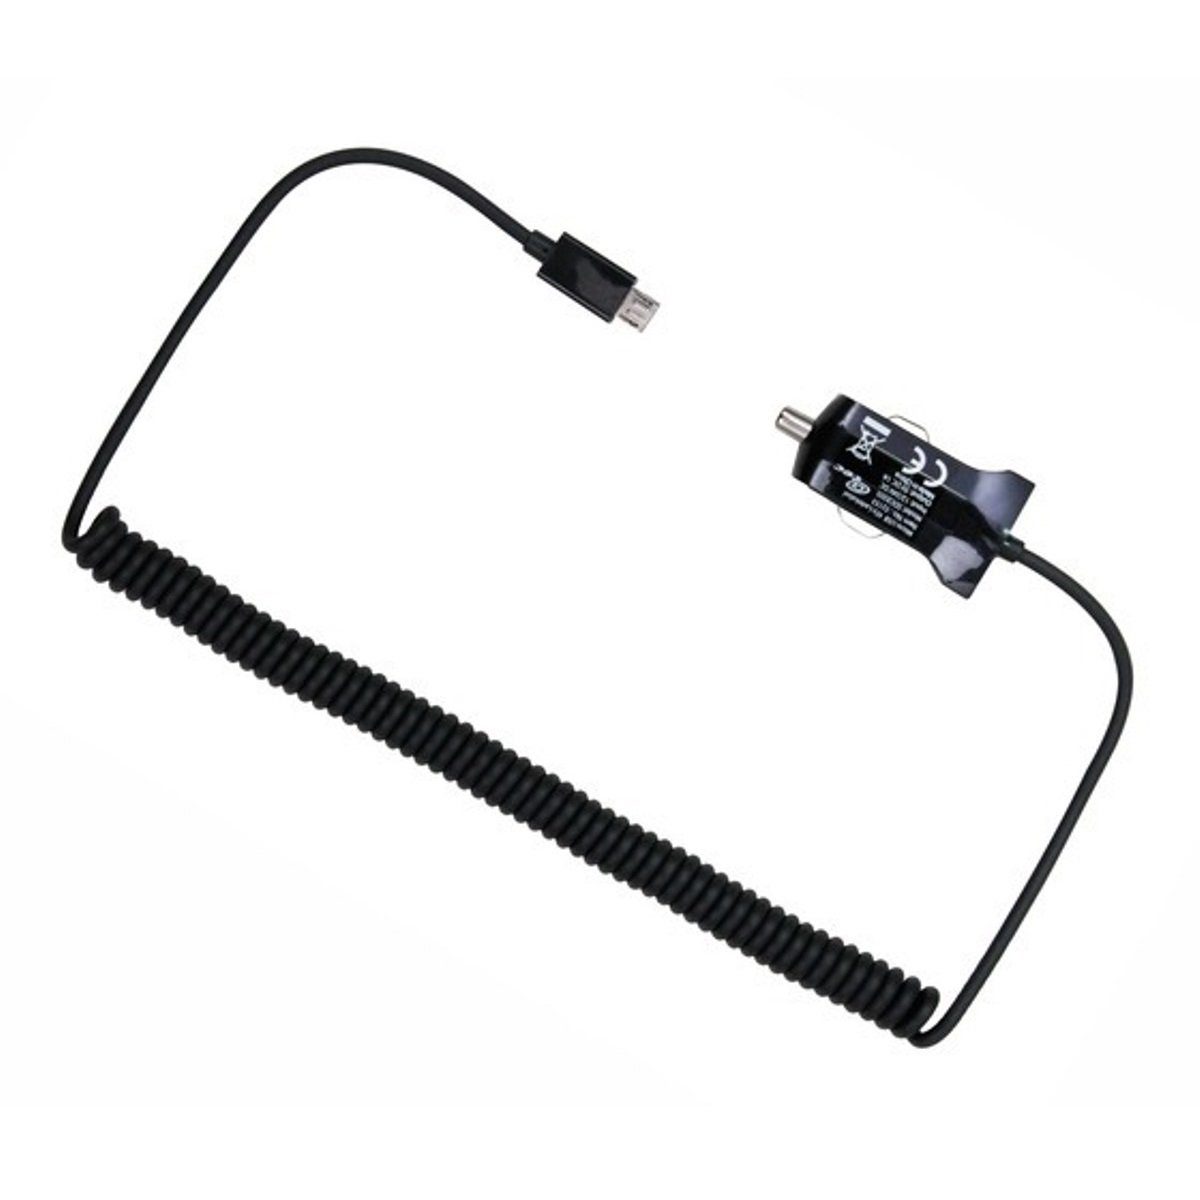 AIV Smartphone-Kabel, Wohnmobil LKW 24V Spiral-Kabel Navi, Micro-USB für NFZ, 12V PKW micro-USB, für Lade-Adapter Auto Handy, Ladekabel KFZ